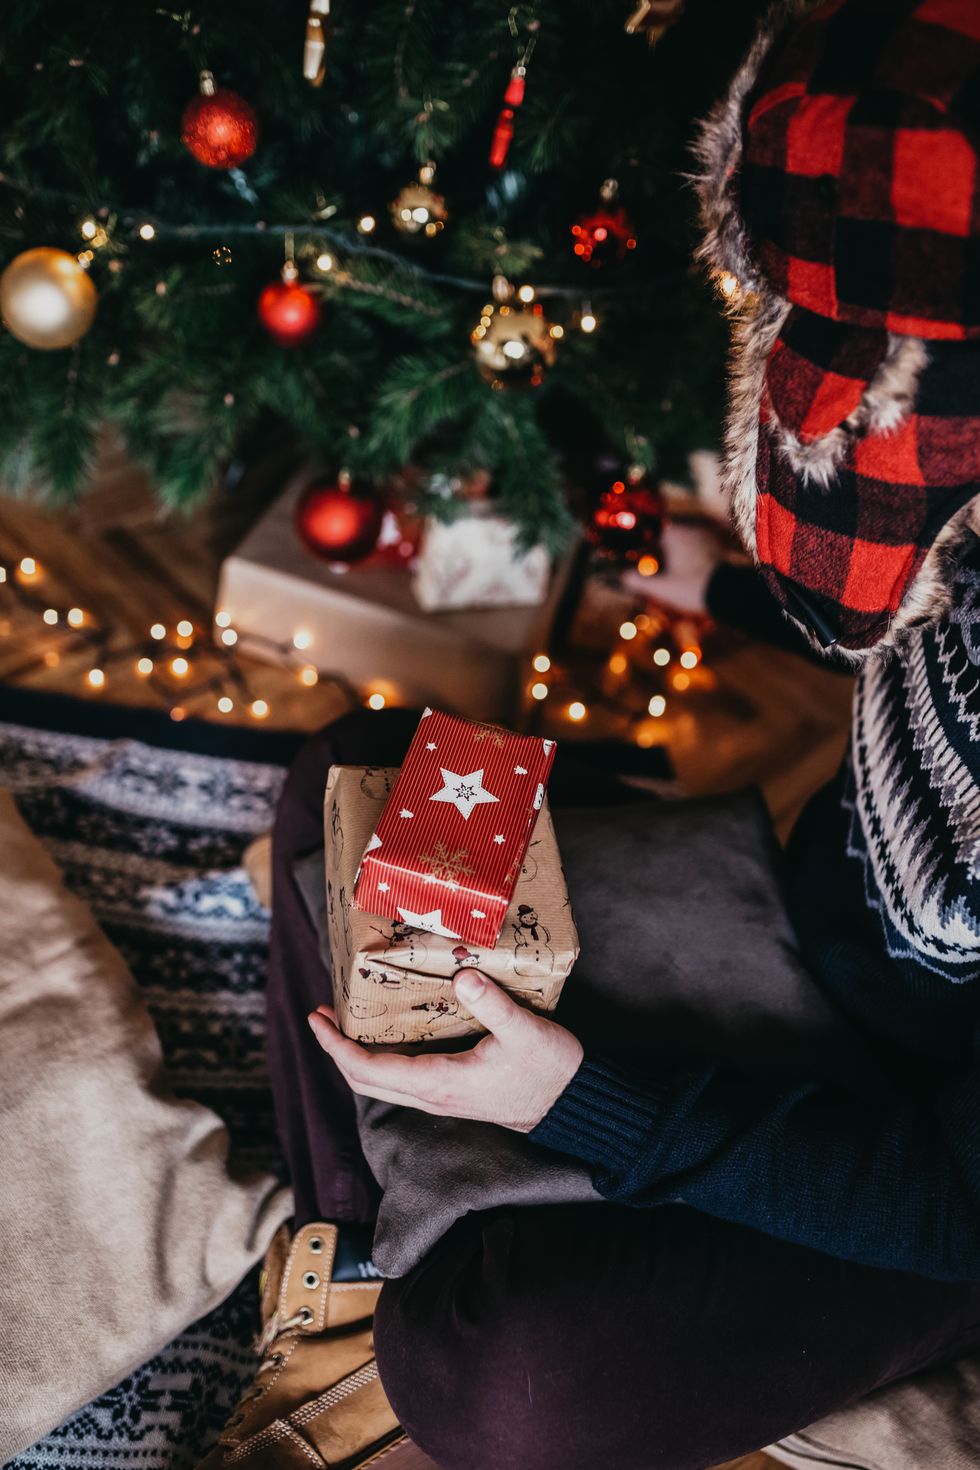 Man placing Christmas present, under Christmas tree.